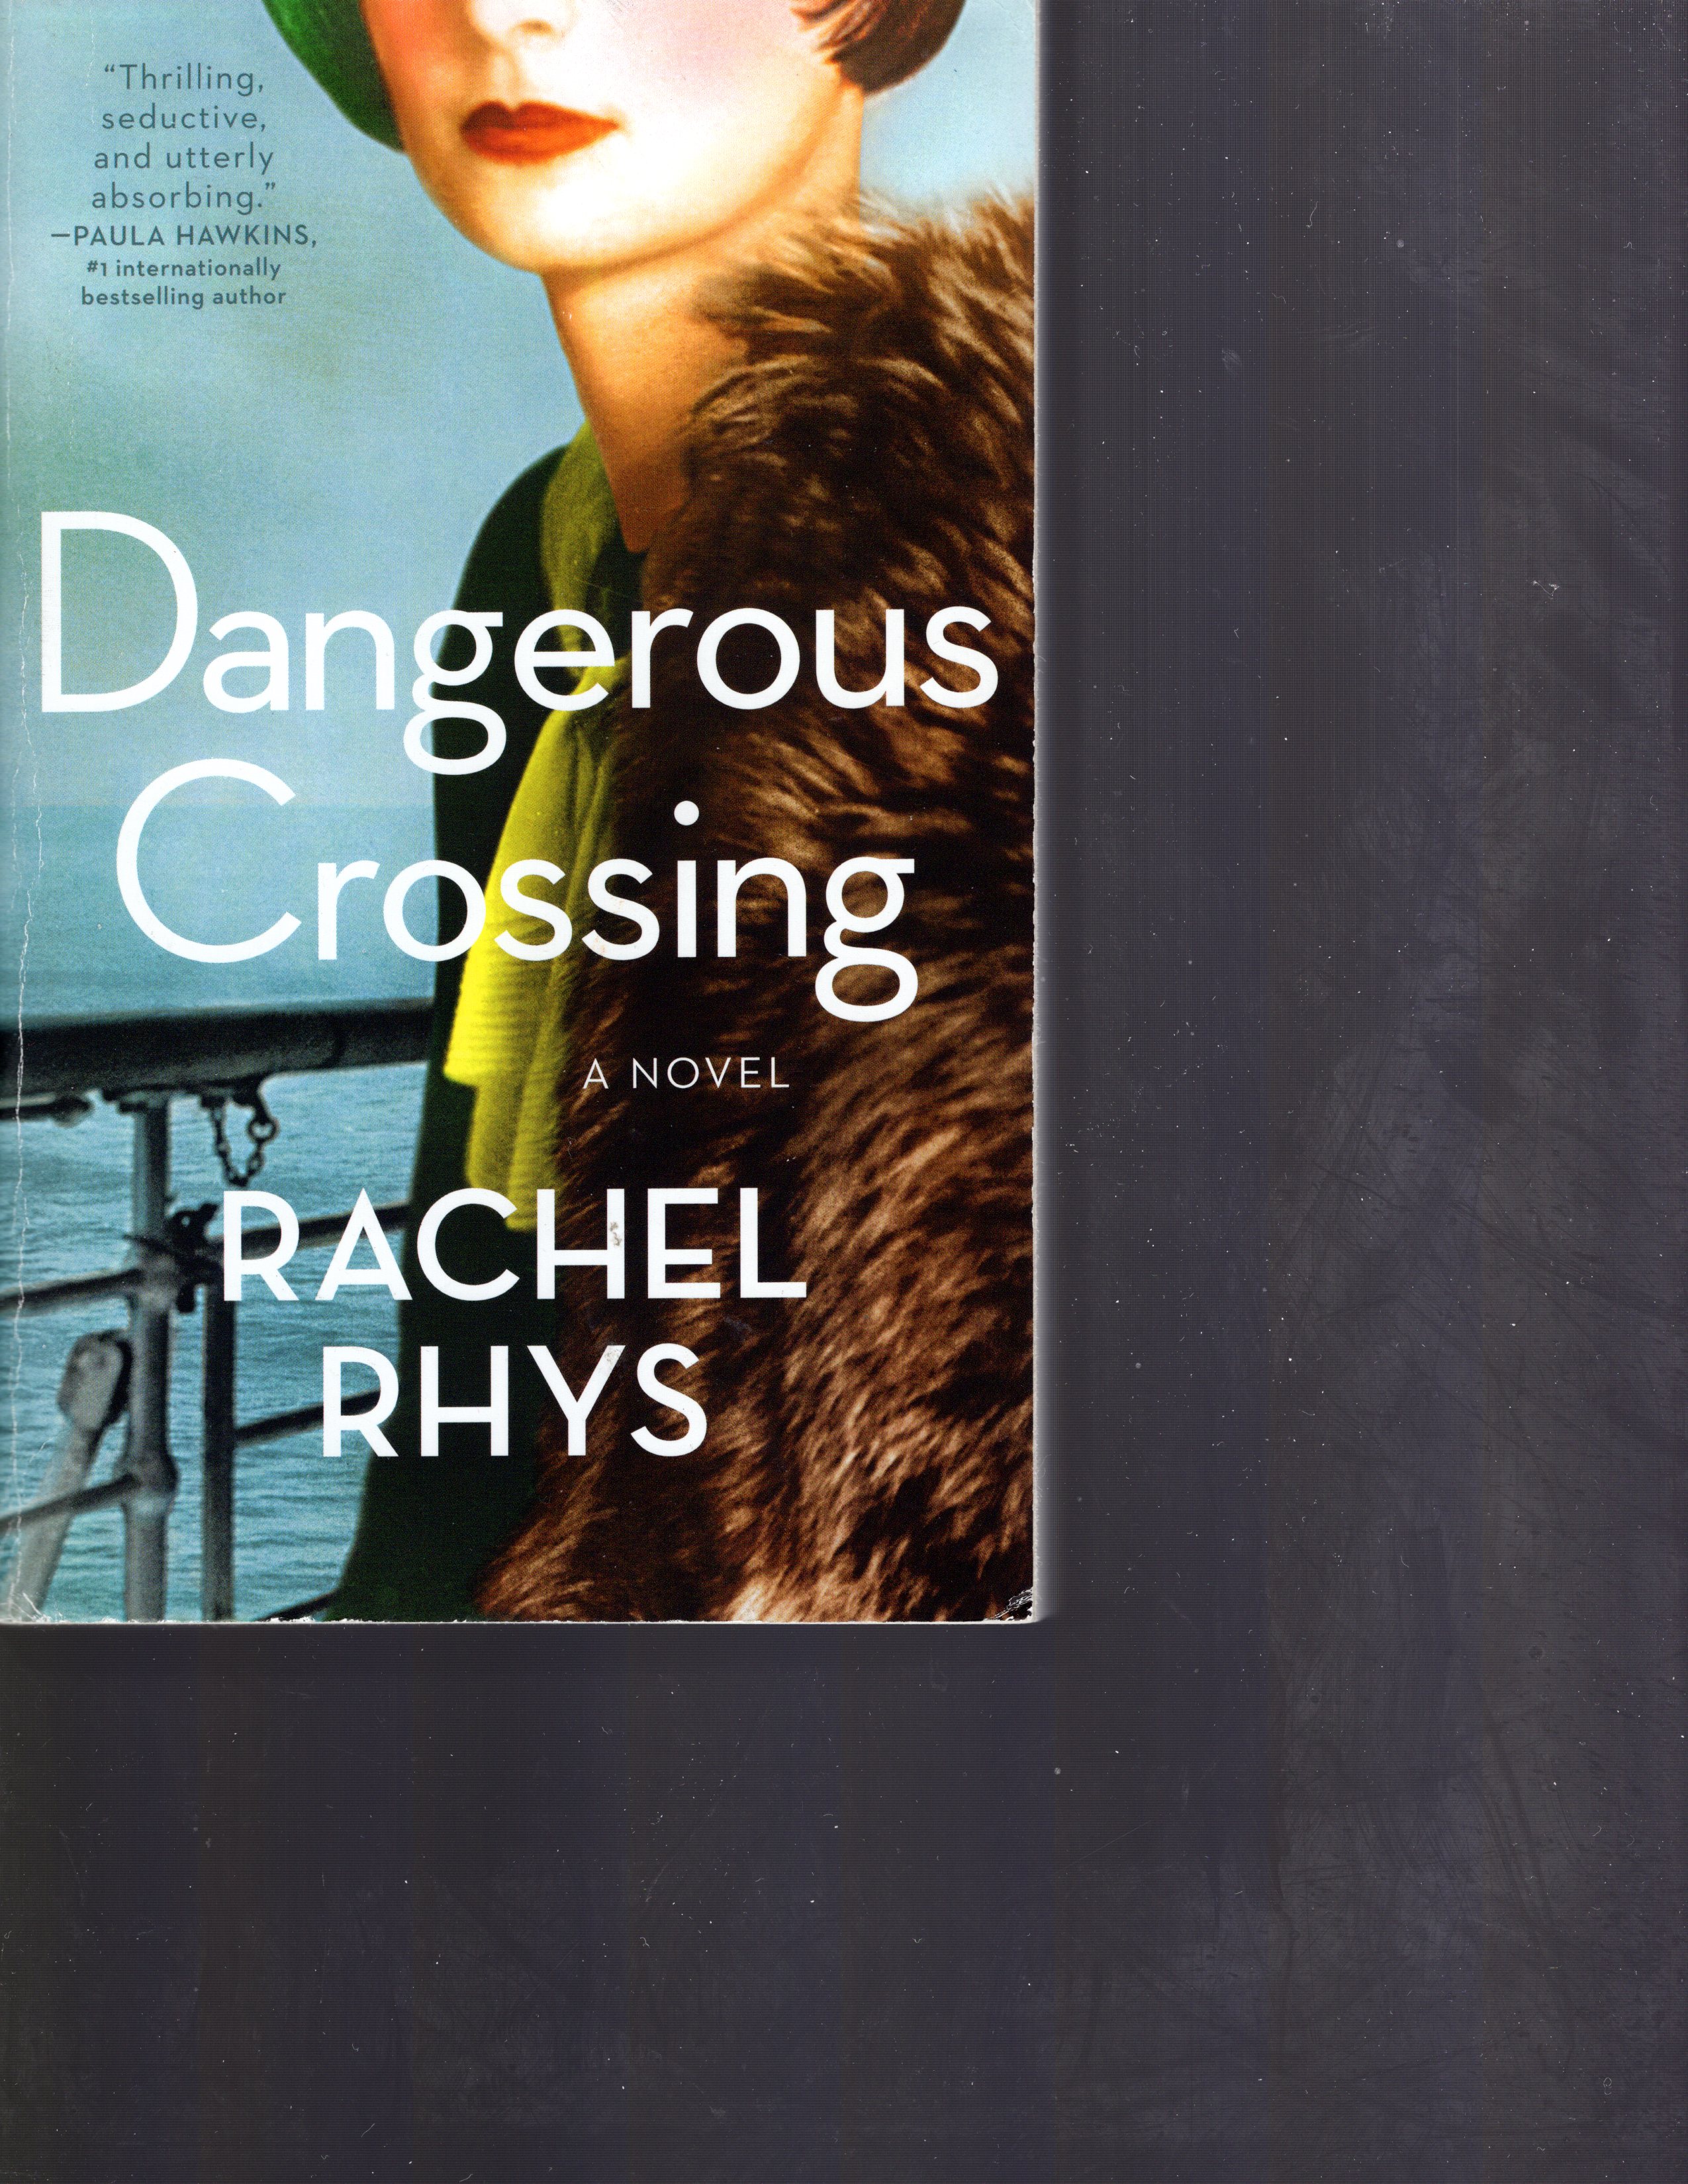 Image for Dangerous Crossing